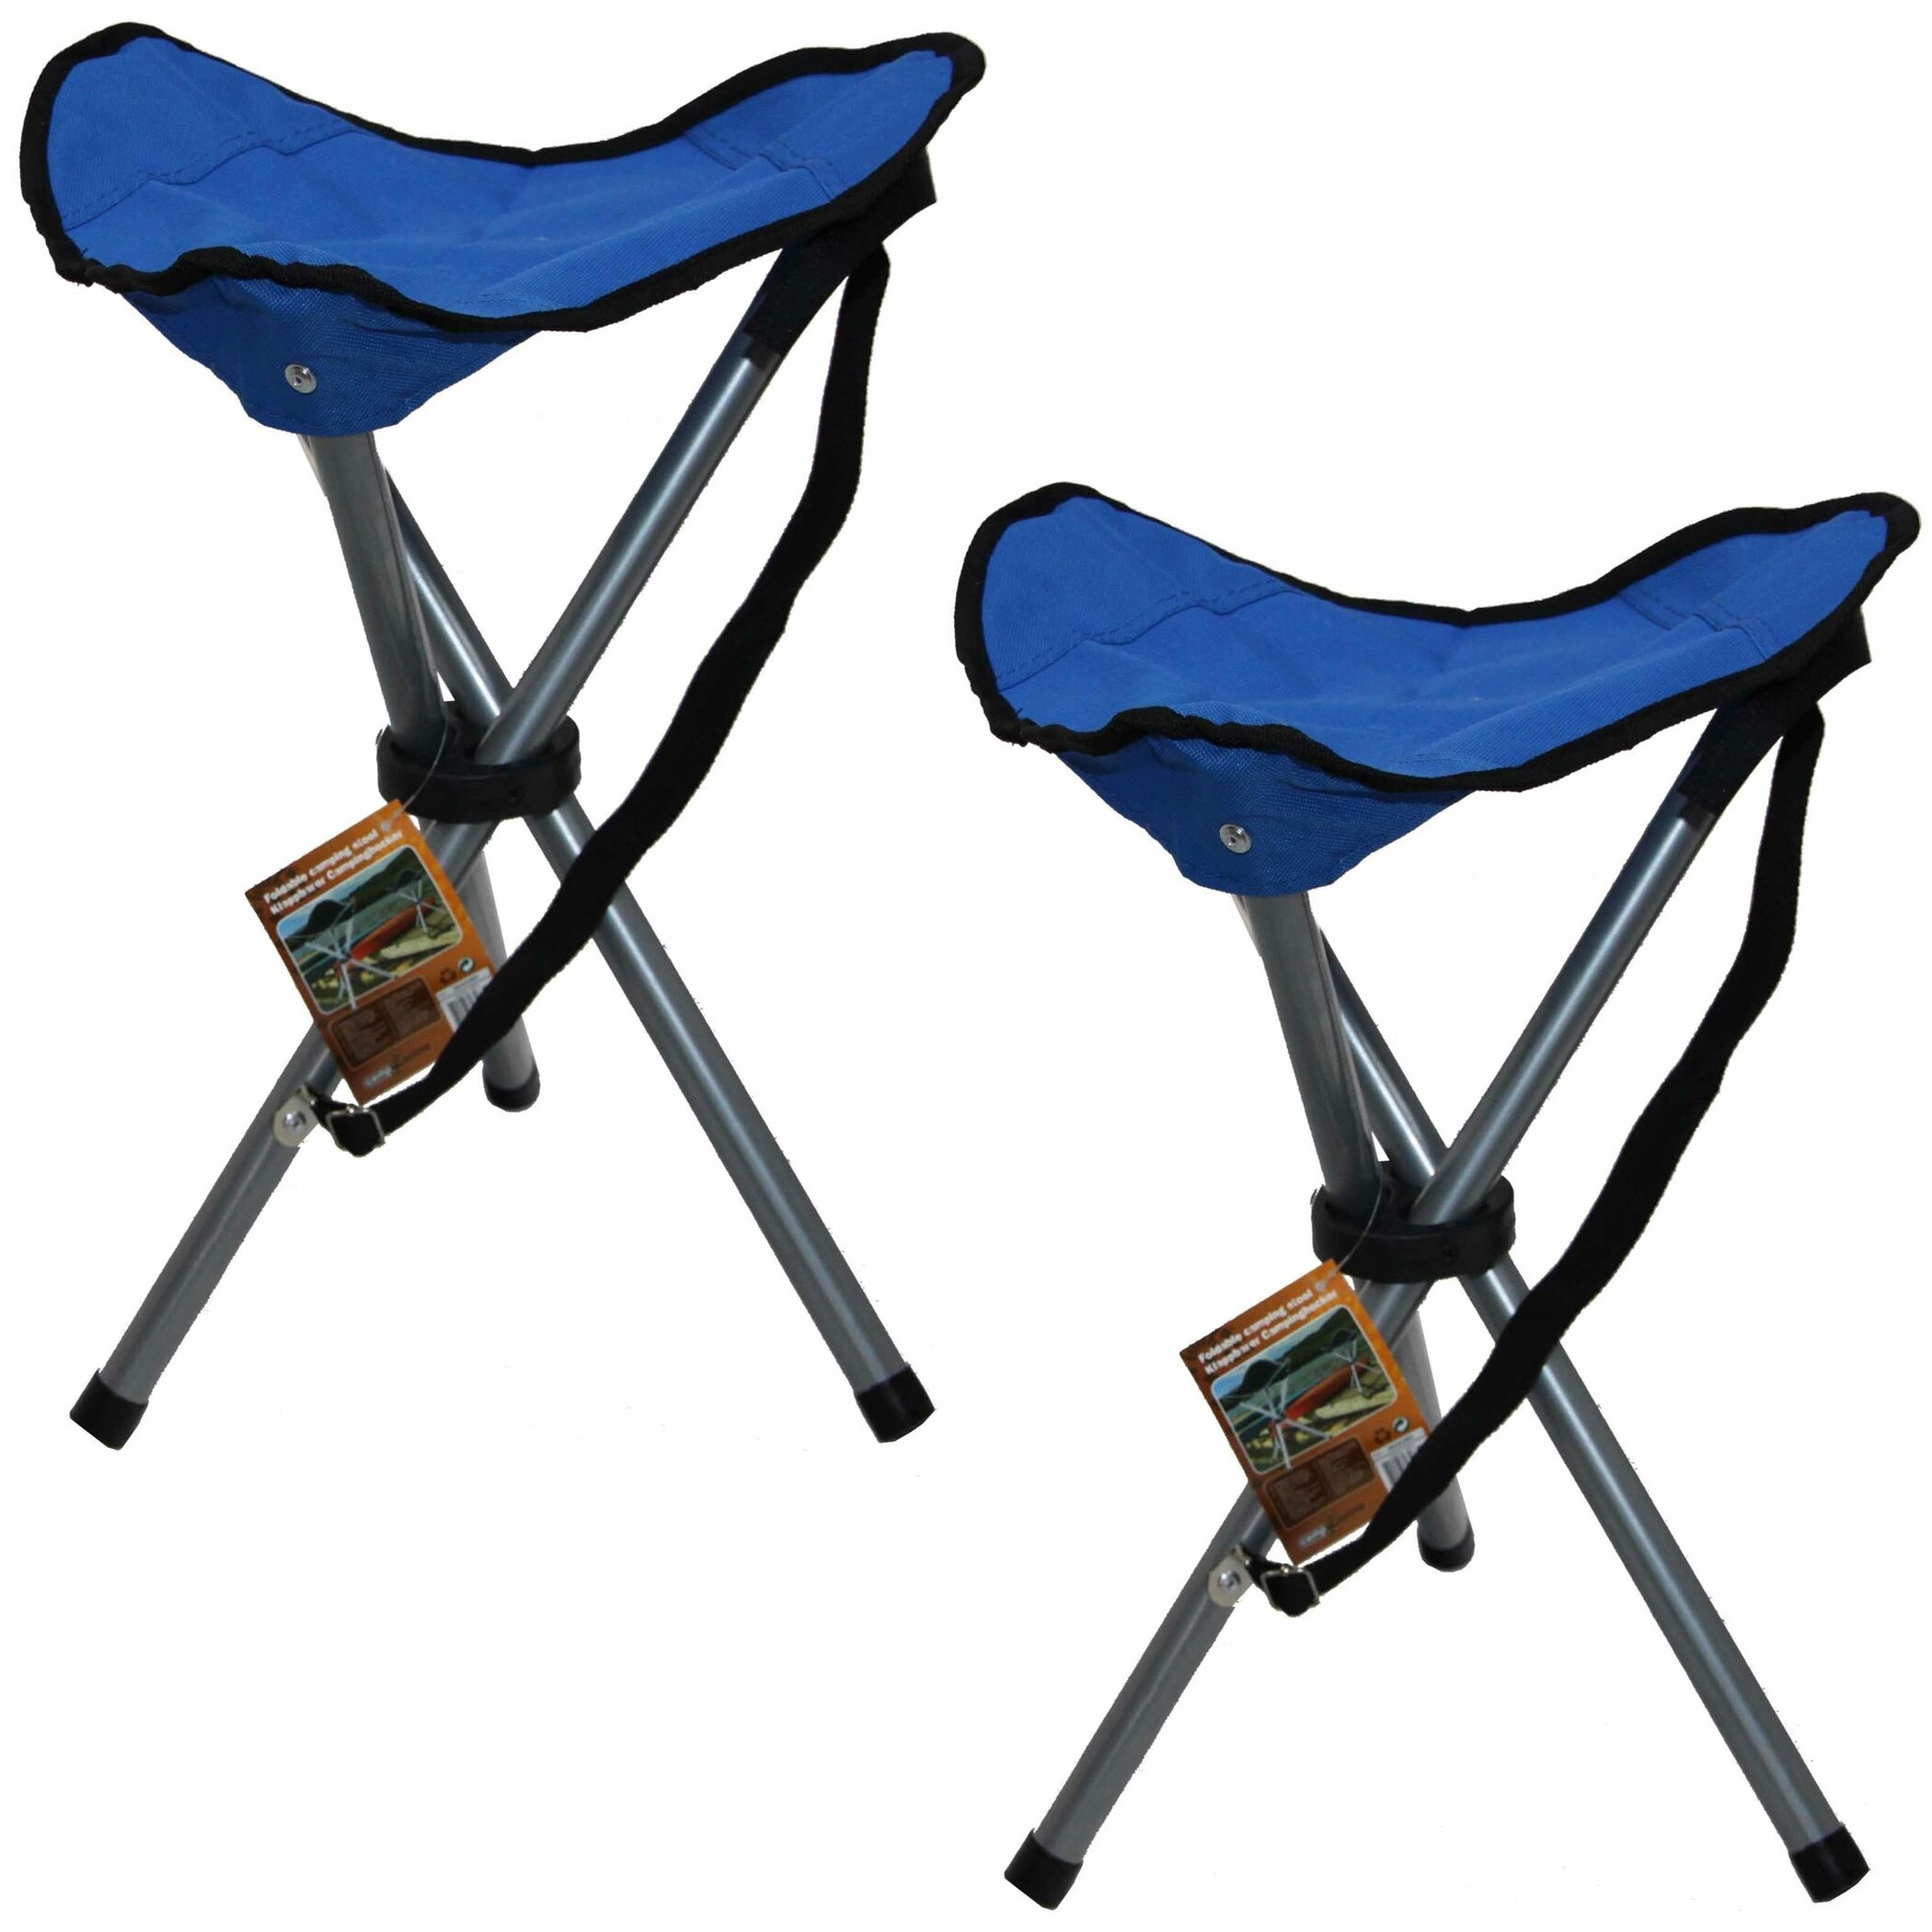 Set van 2x stuks blauwe opvouwbare lichtgewicht campingkrukjes/visserskrukjes 31 x 50 cm - Outdoor/vakantie - Inklapbare stoeltjes